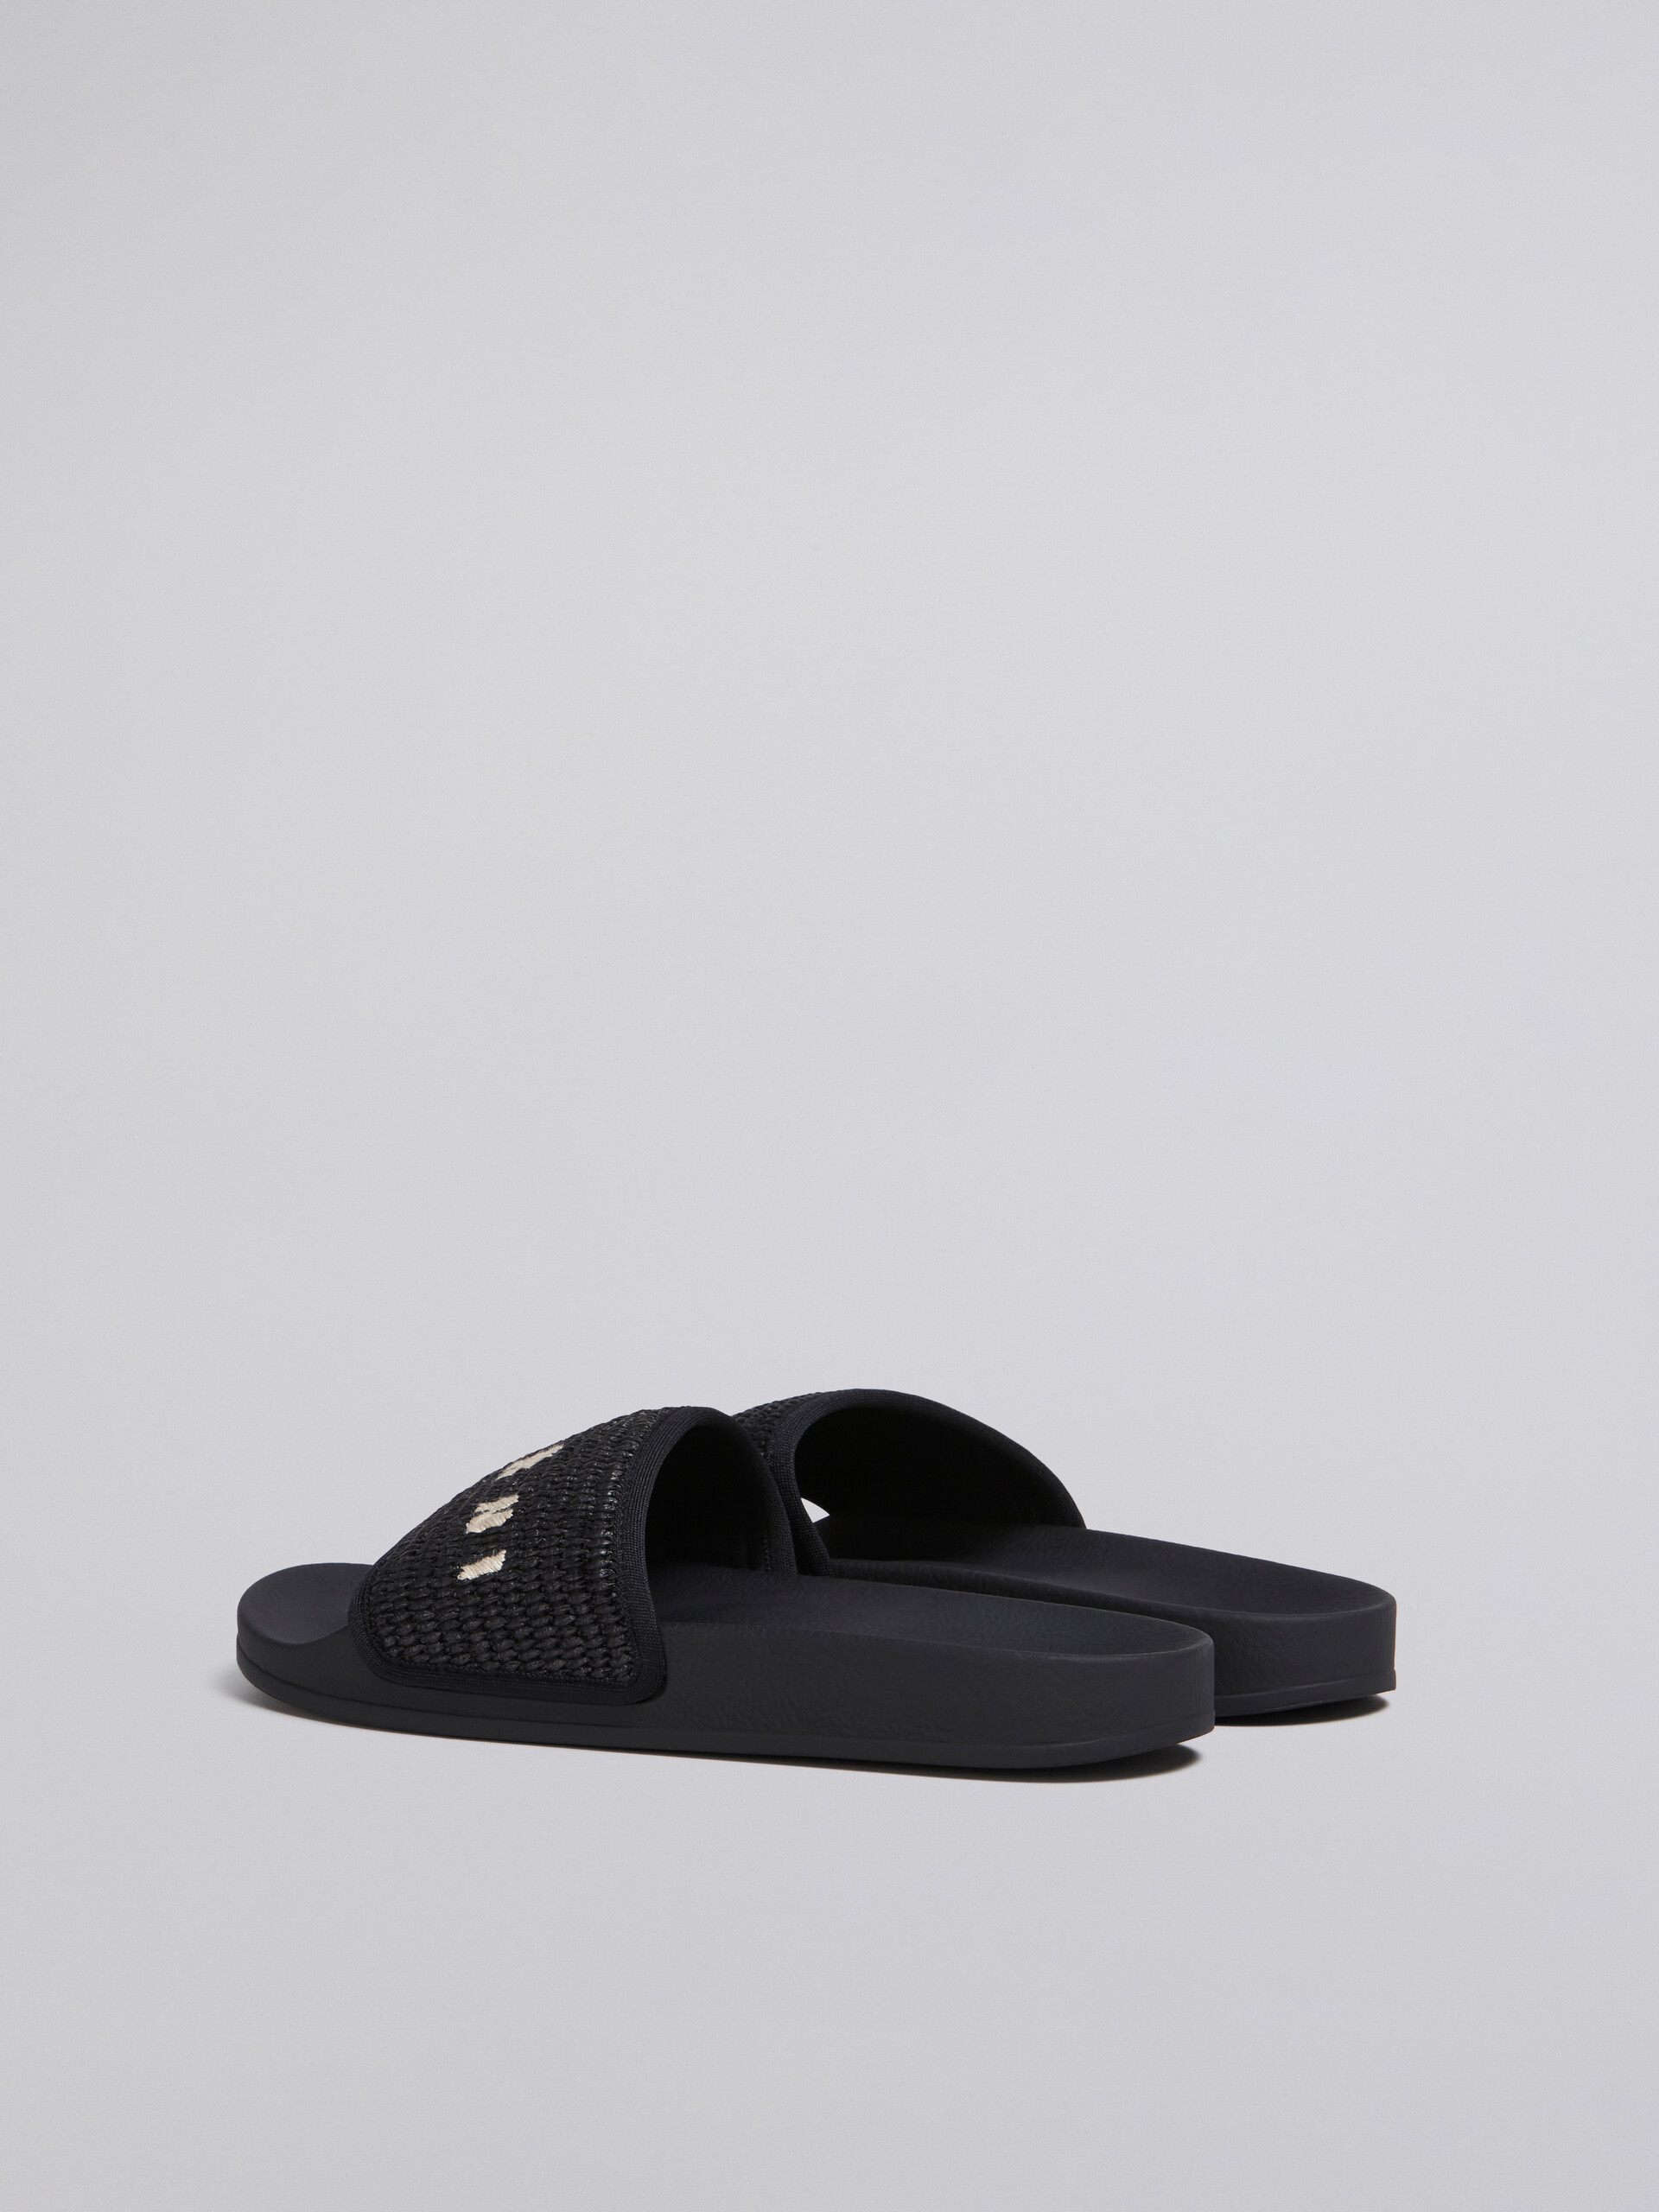 Black raffia sandal - Sandals - Image 3